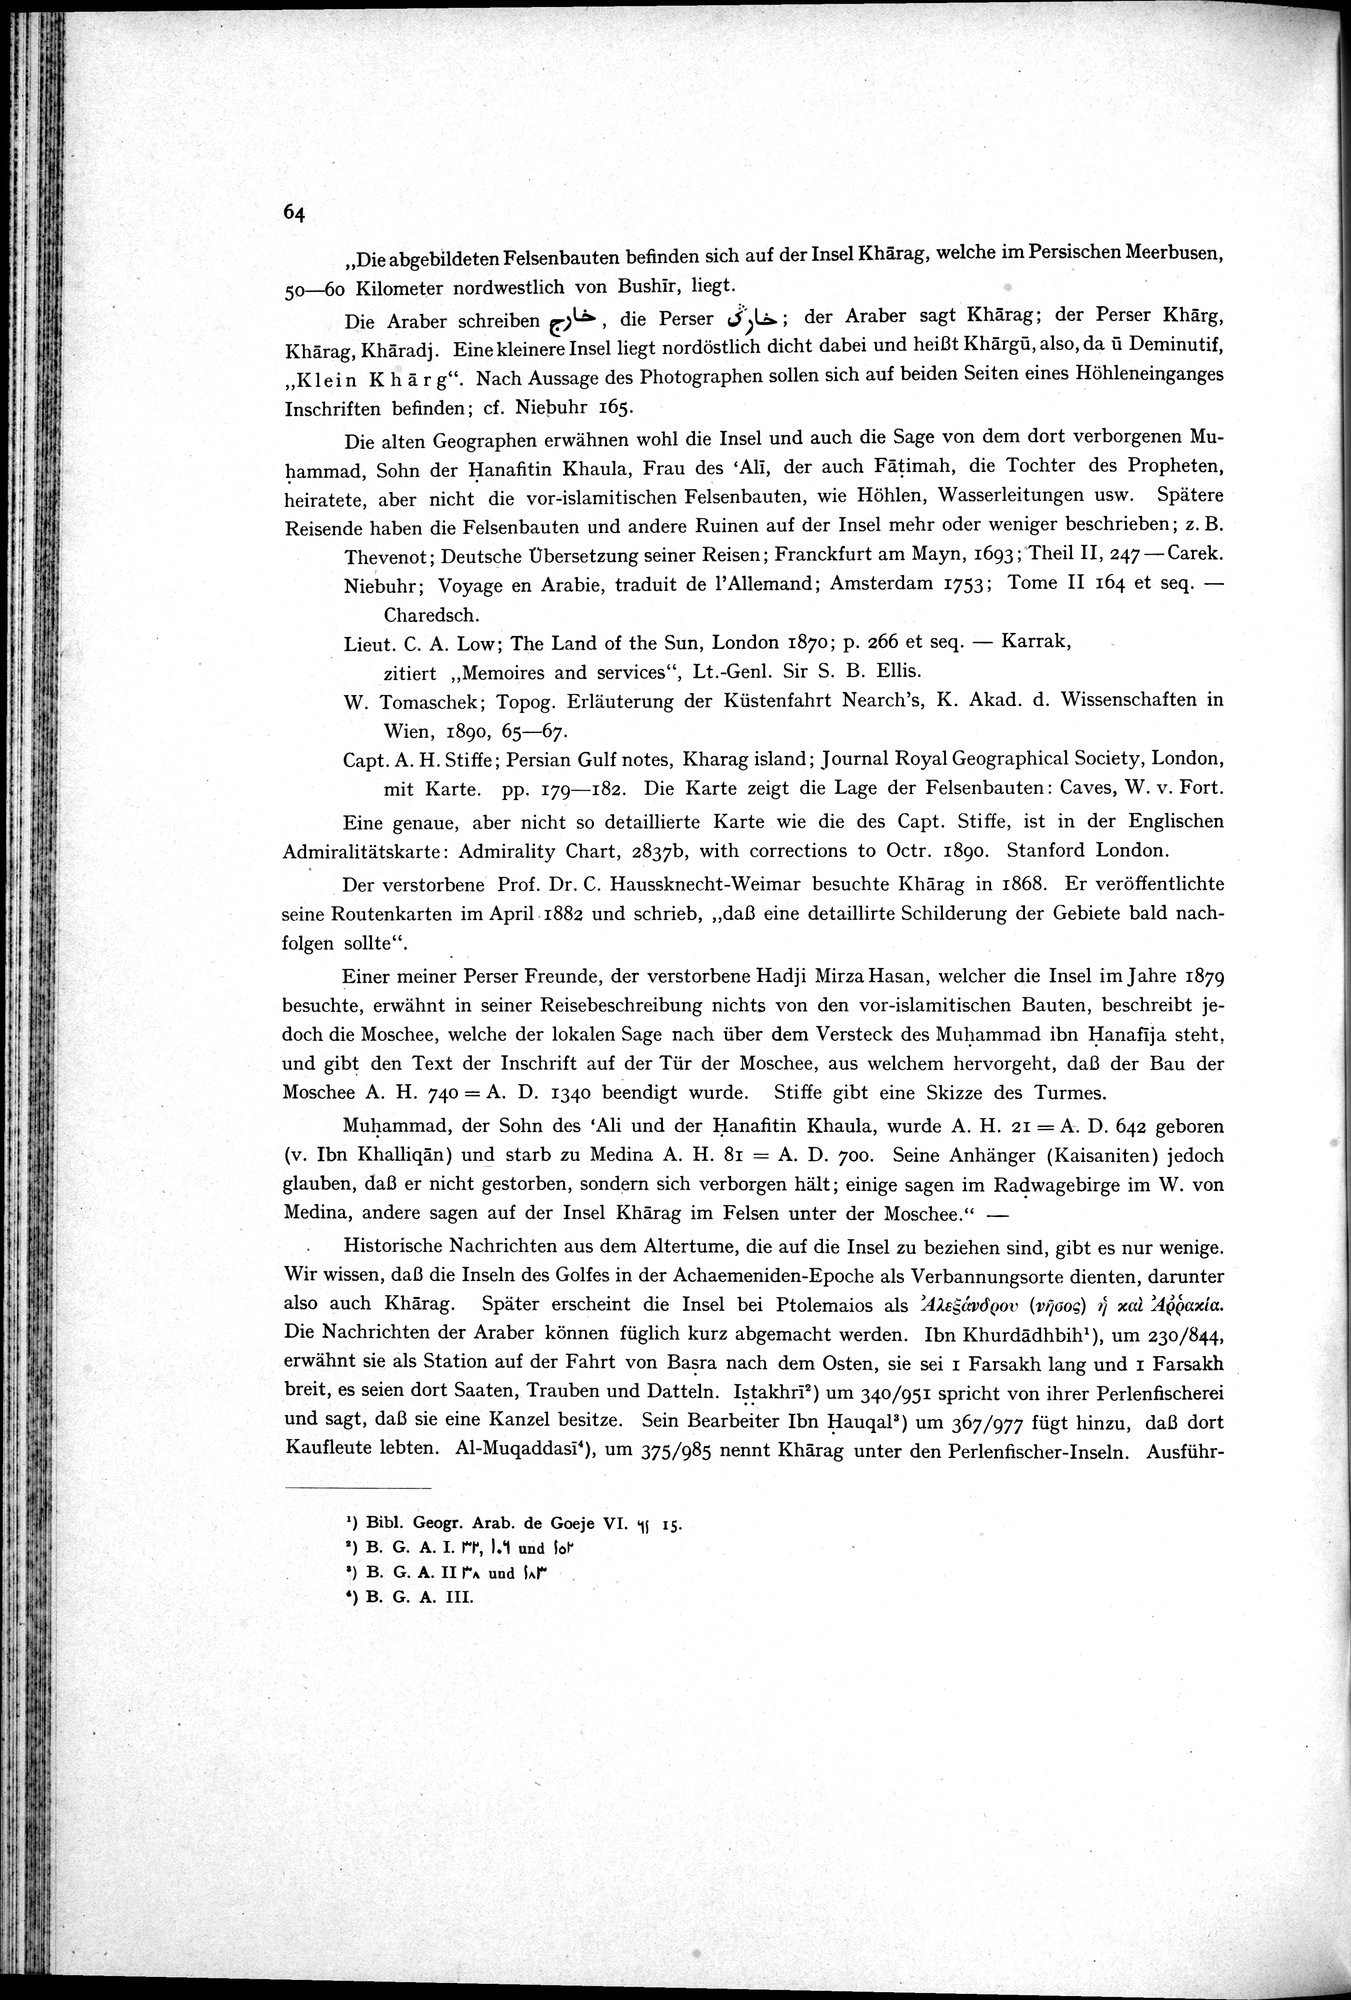 Iranische Felsreliefs : vol.1 / Page 76 (Grayscale High Resolution Image)